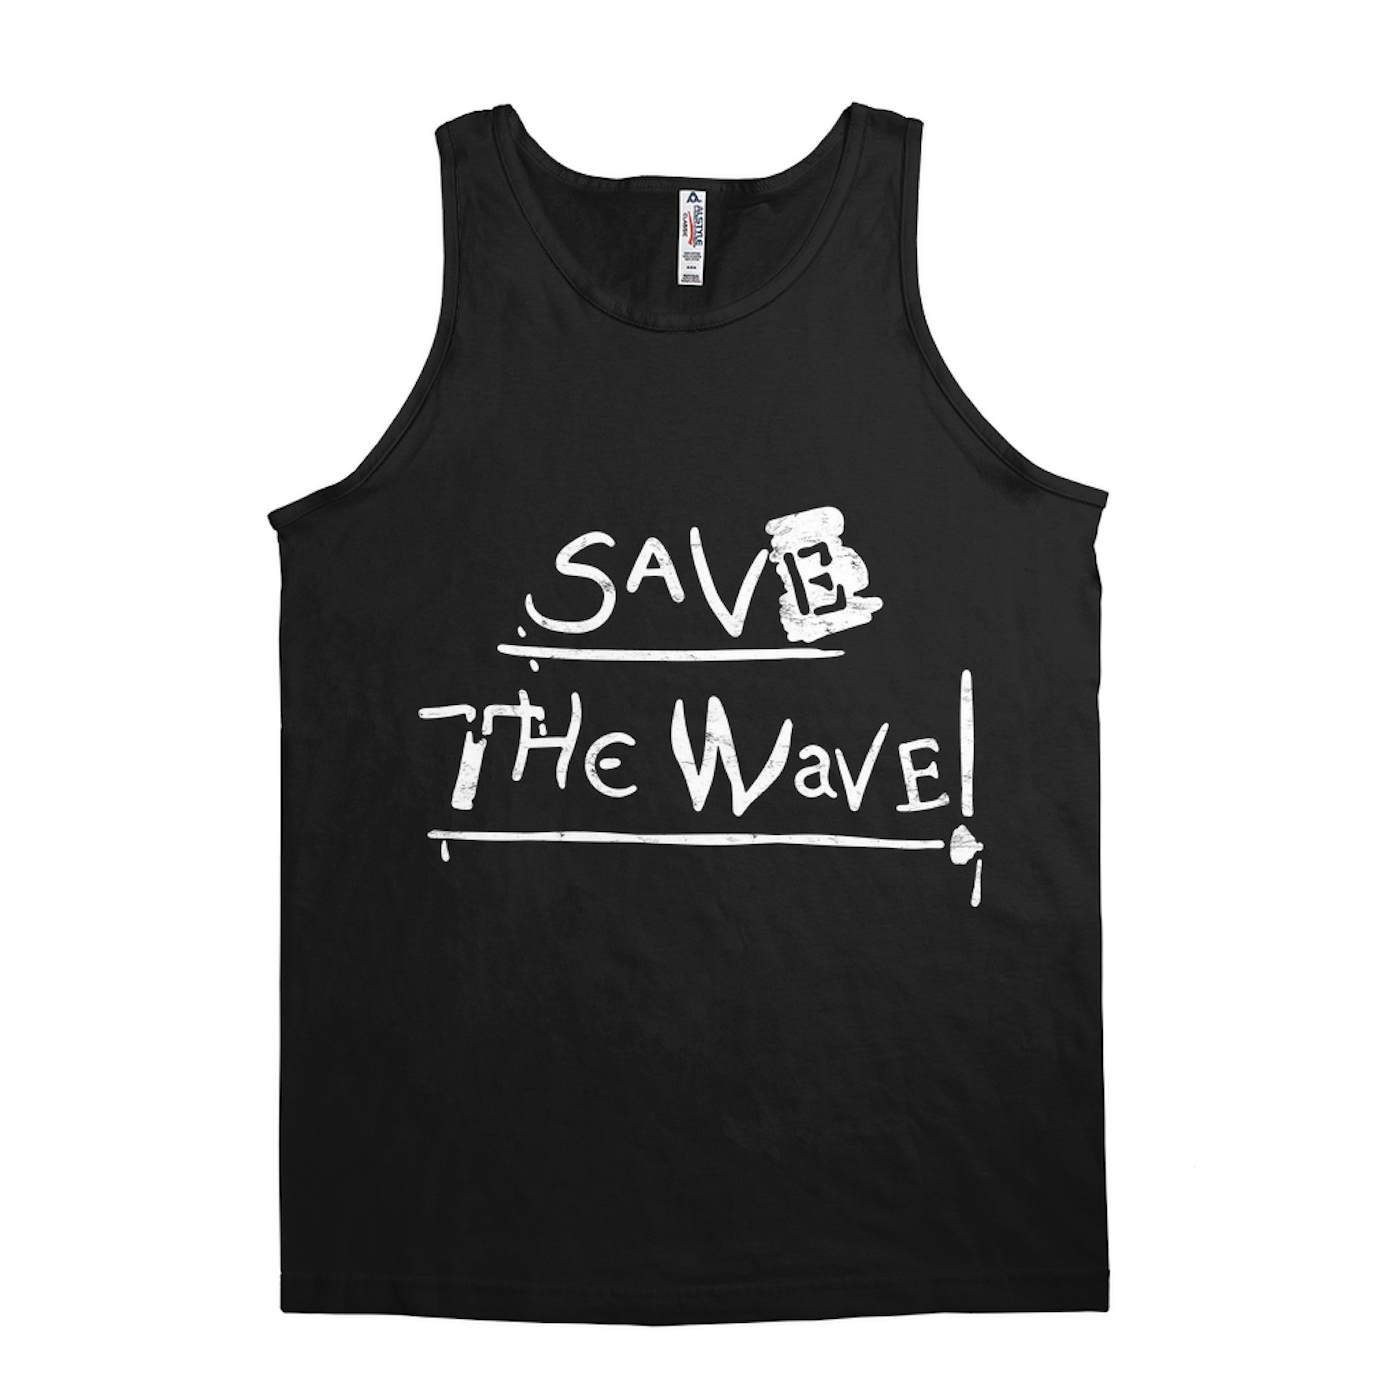 Joan Jett & the BlackheartsUnisex Tank Top | Save The Wave Worn By Joan Jett And The Blackhearts Shirt